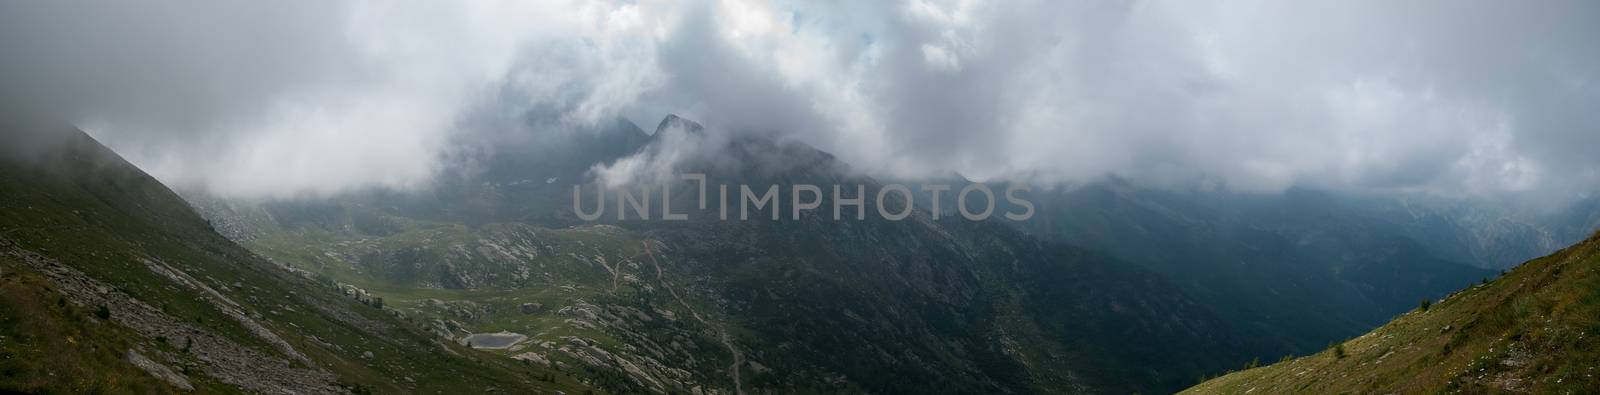 Hiking in Alps by javax